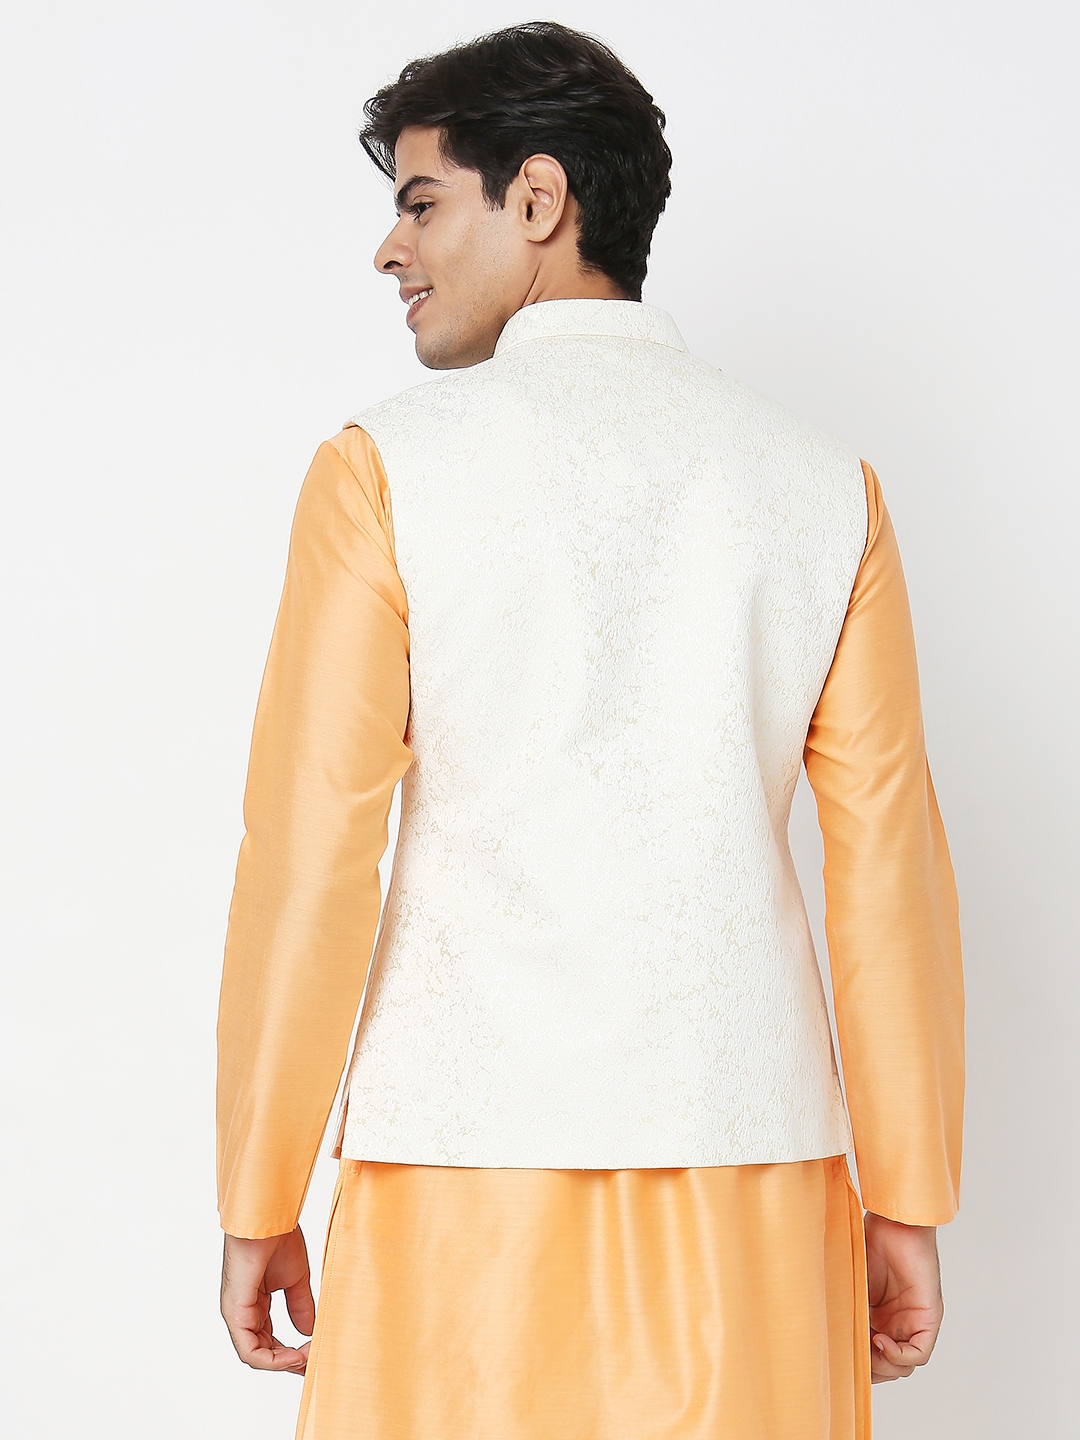 Ethnicity | Ethnicity Men's Cream Polyester Solid Jackets | M 3